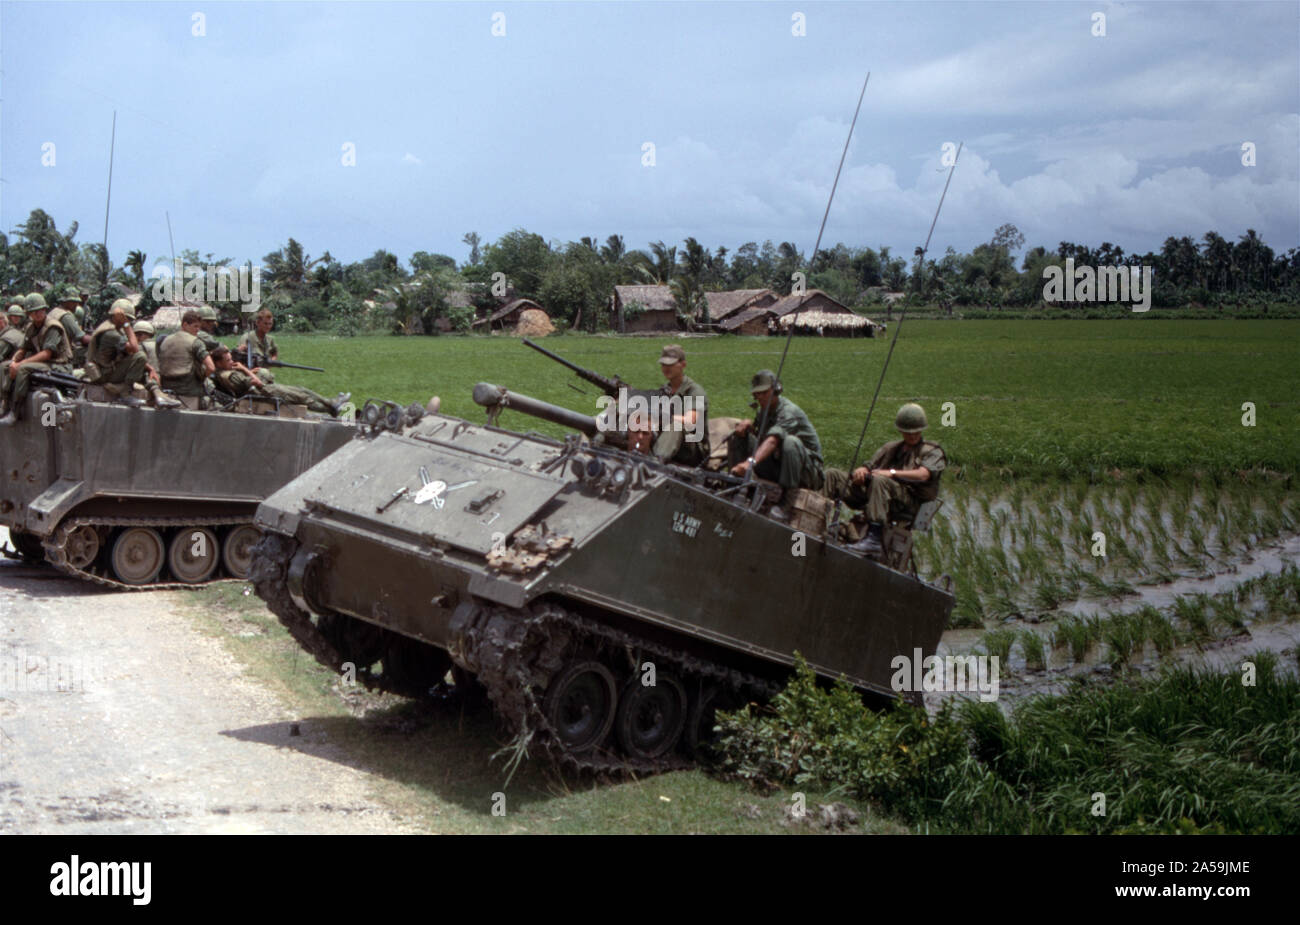 USA Vietnam-Krieg / Vietnam War - US ARMY / United States Army Flammenwerfert / Armored Flamethrower M132 / Zippo Stock Photo